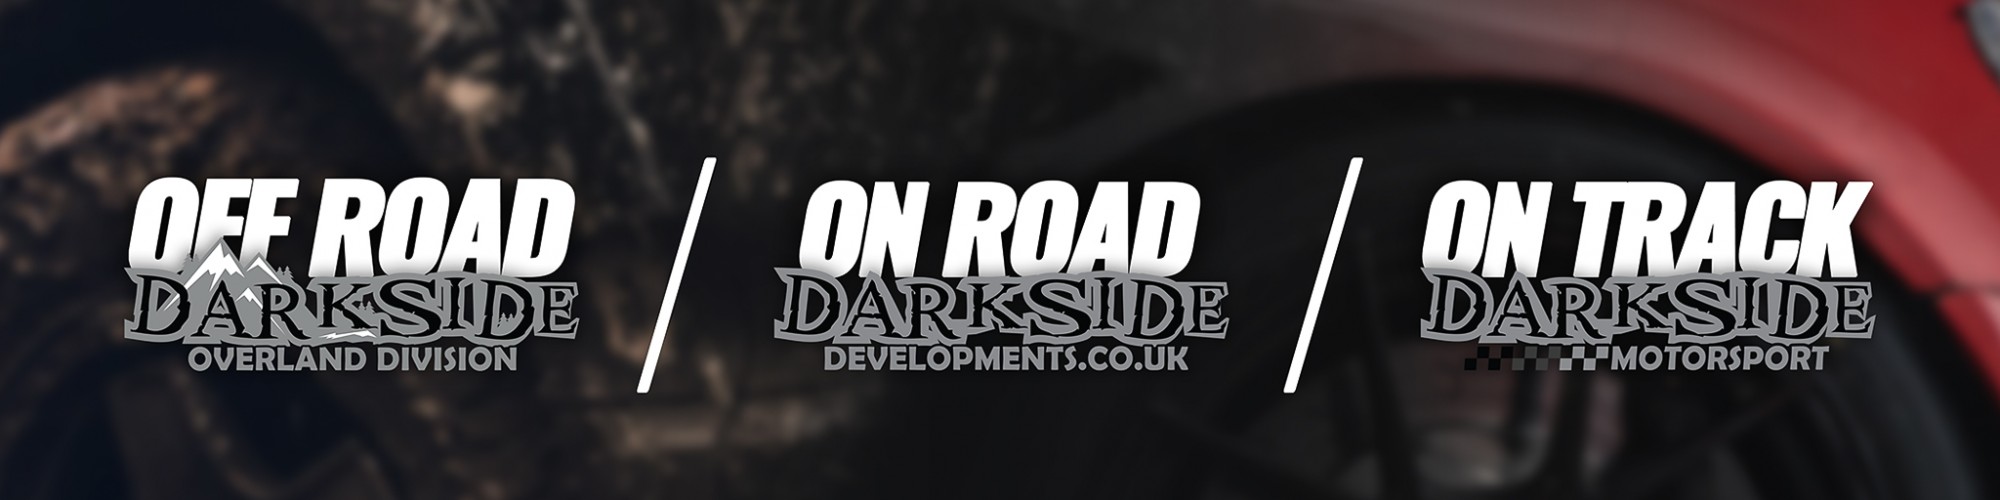 Darkside Developments cover image